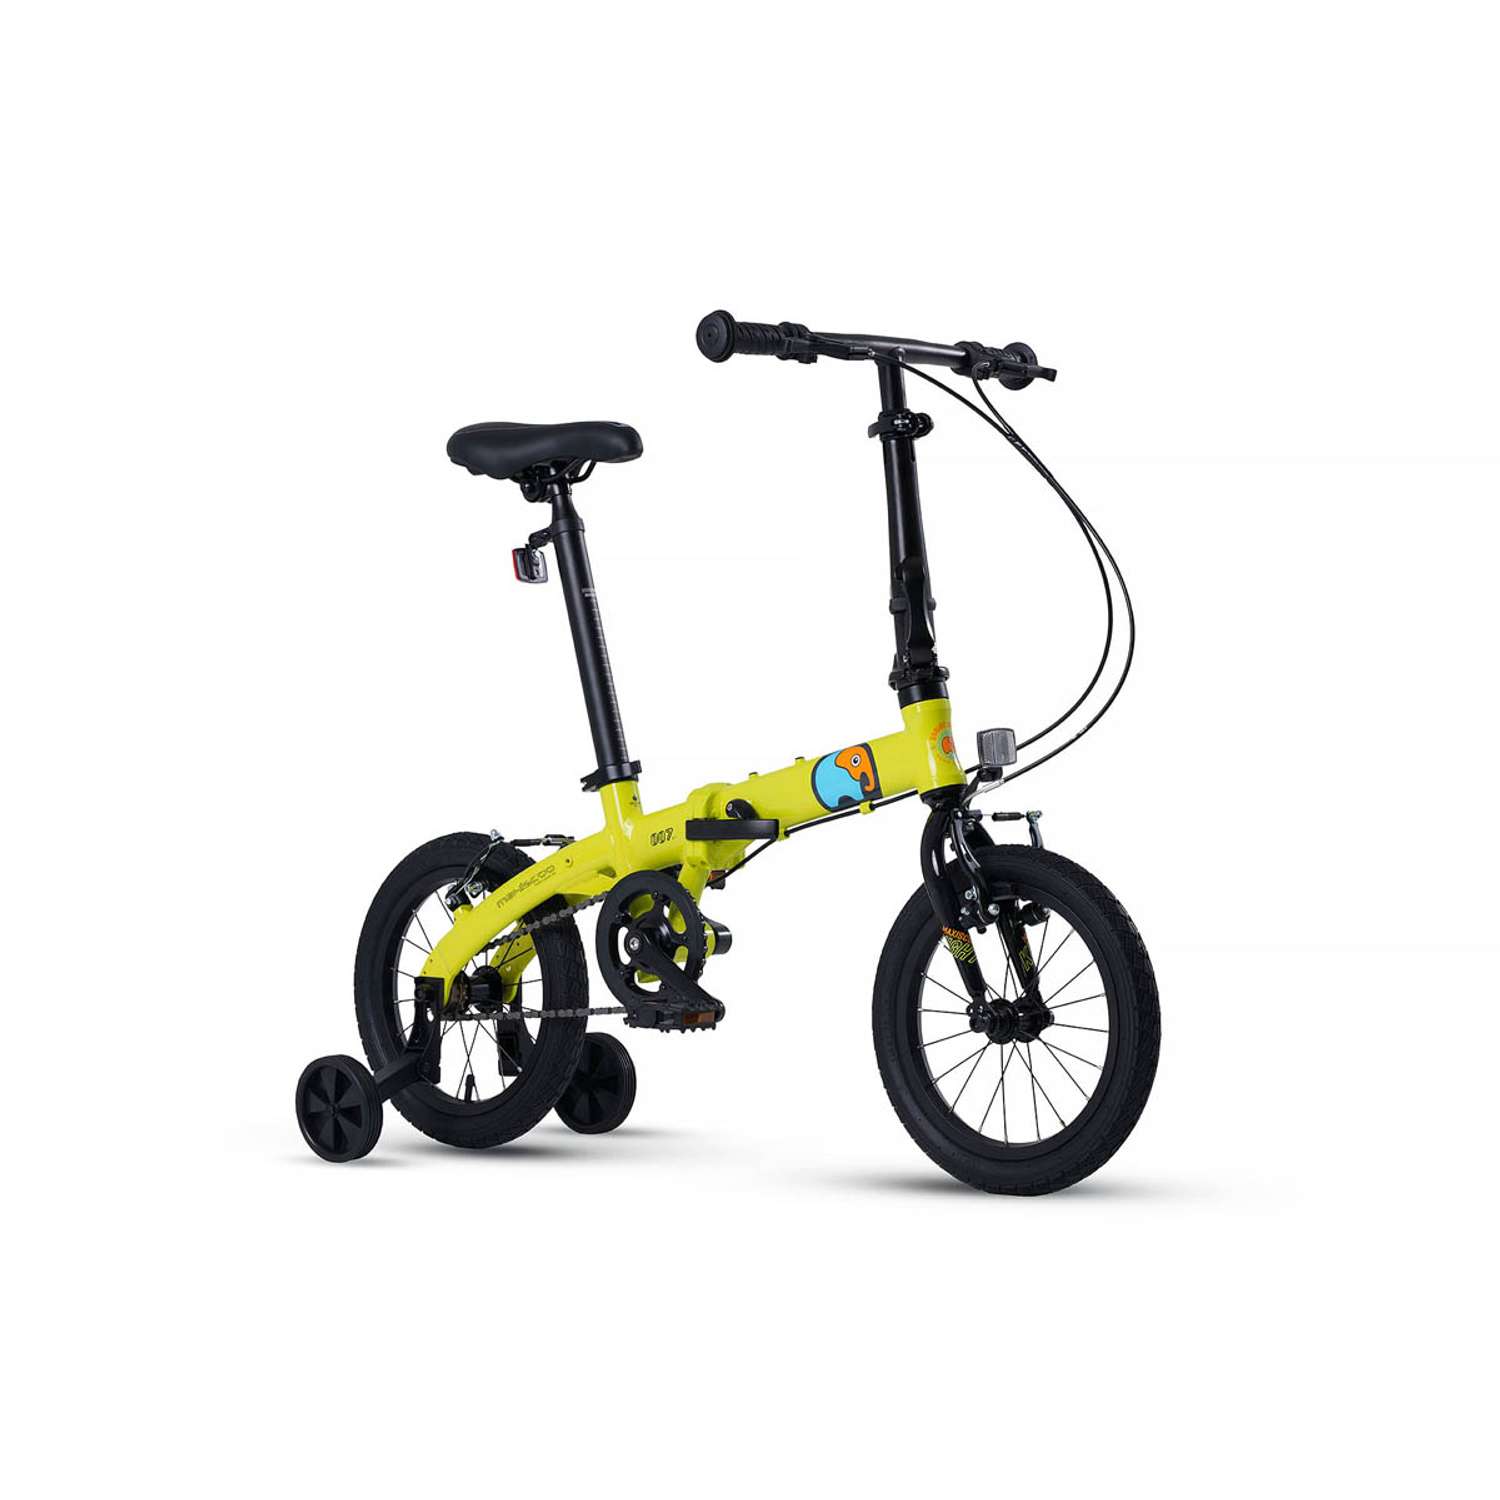 Велосипед Детский Складной Maxiscoo S007 стандарт 14 желтый - фото 2